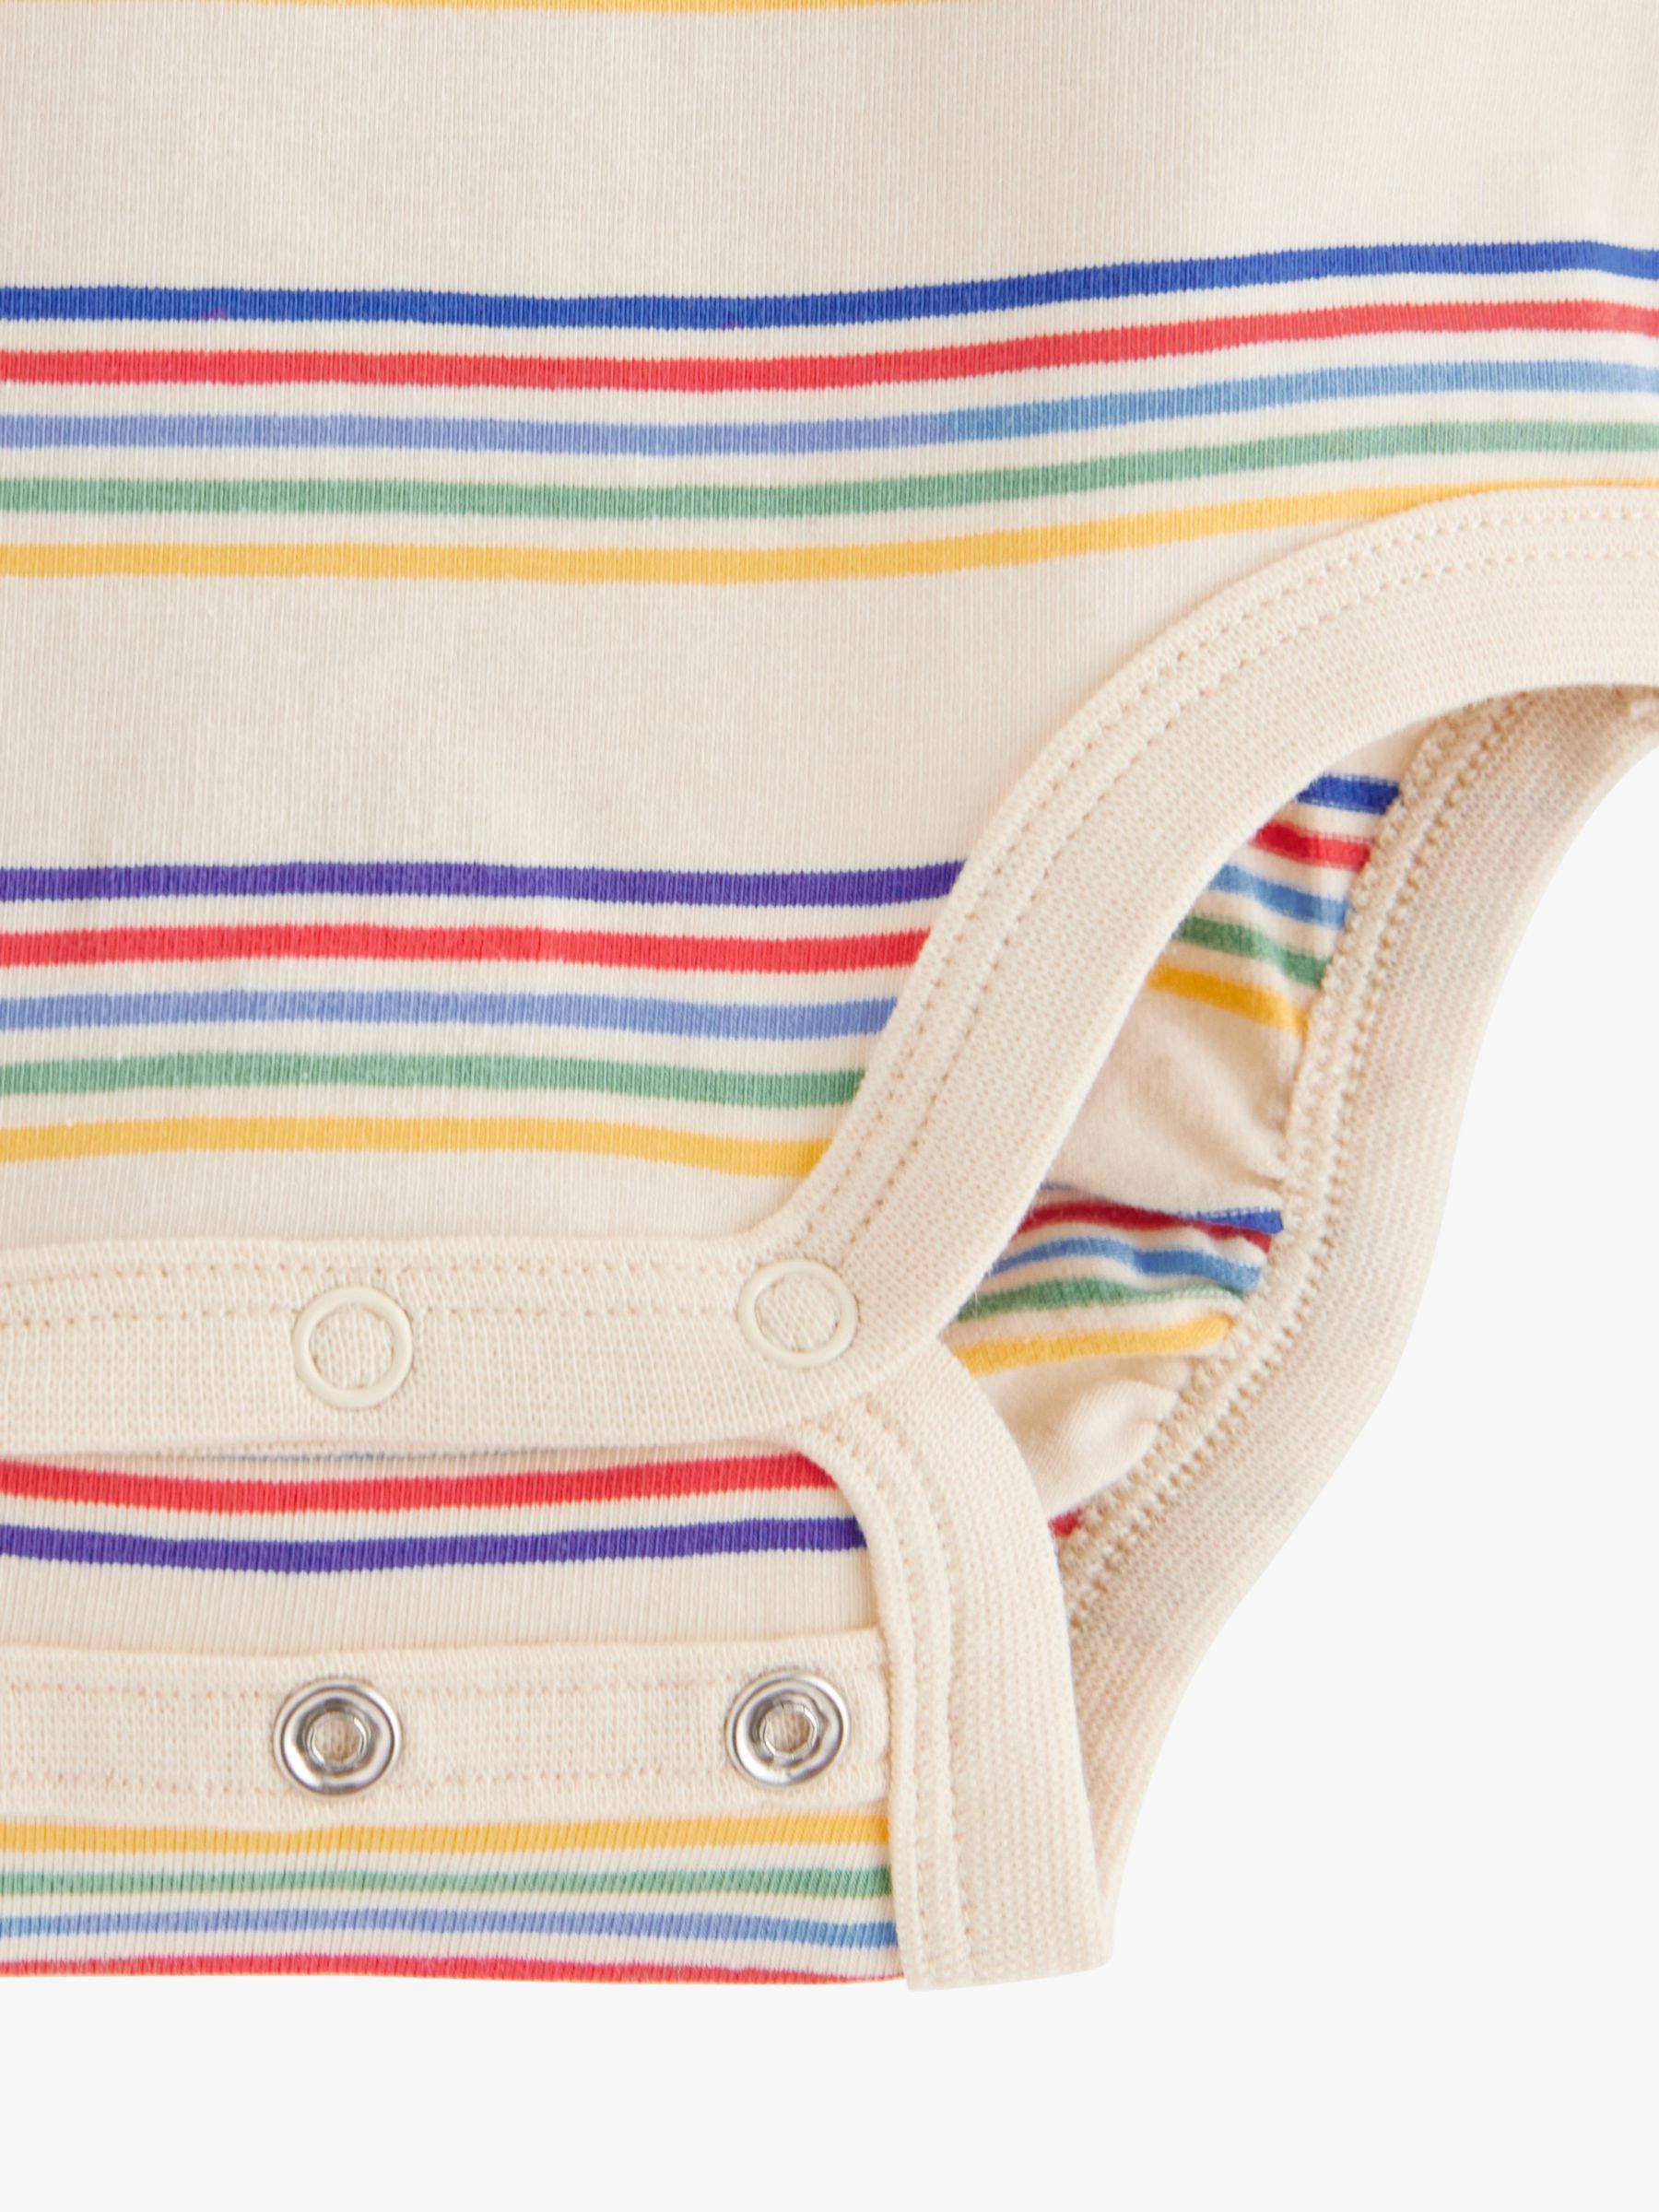 Buy Lindex Baby Multistripe Bodysuit, Light Beige/Multi Online at johnlewis.com